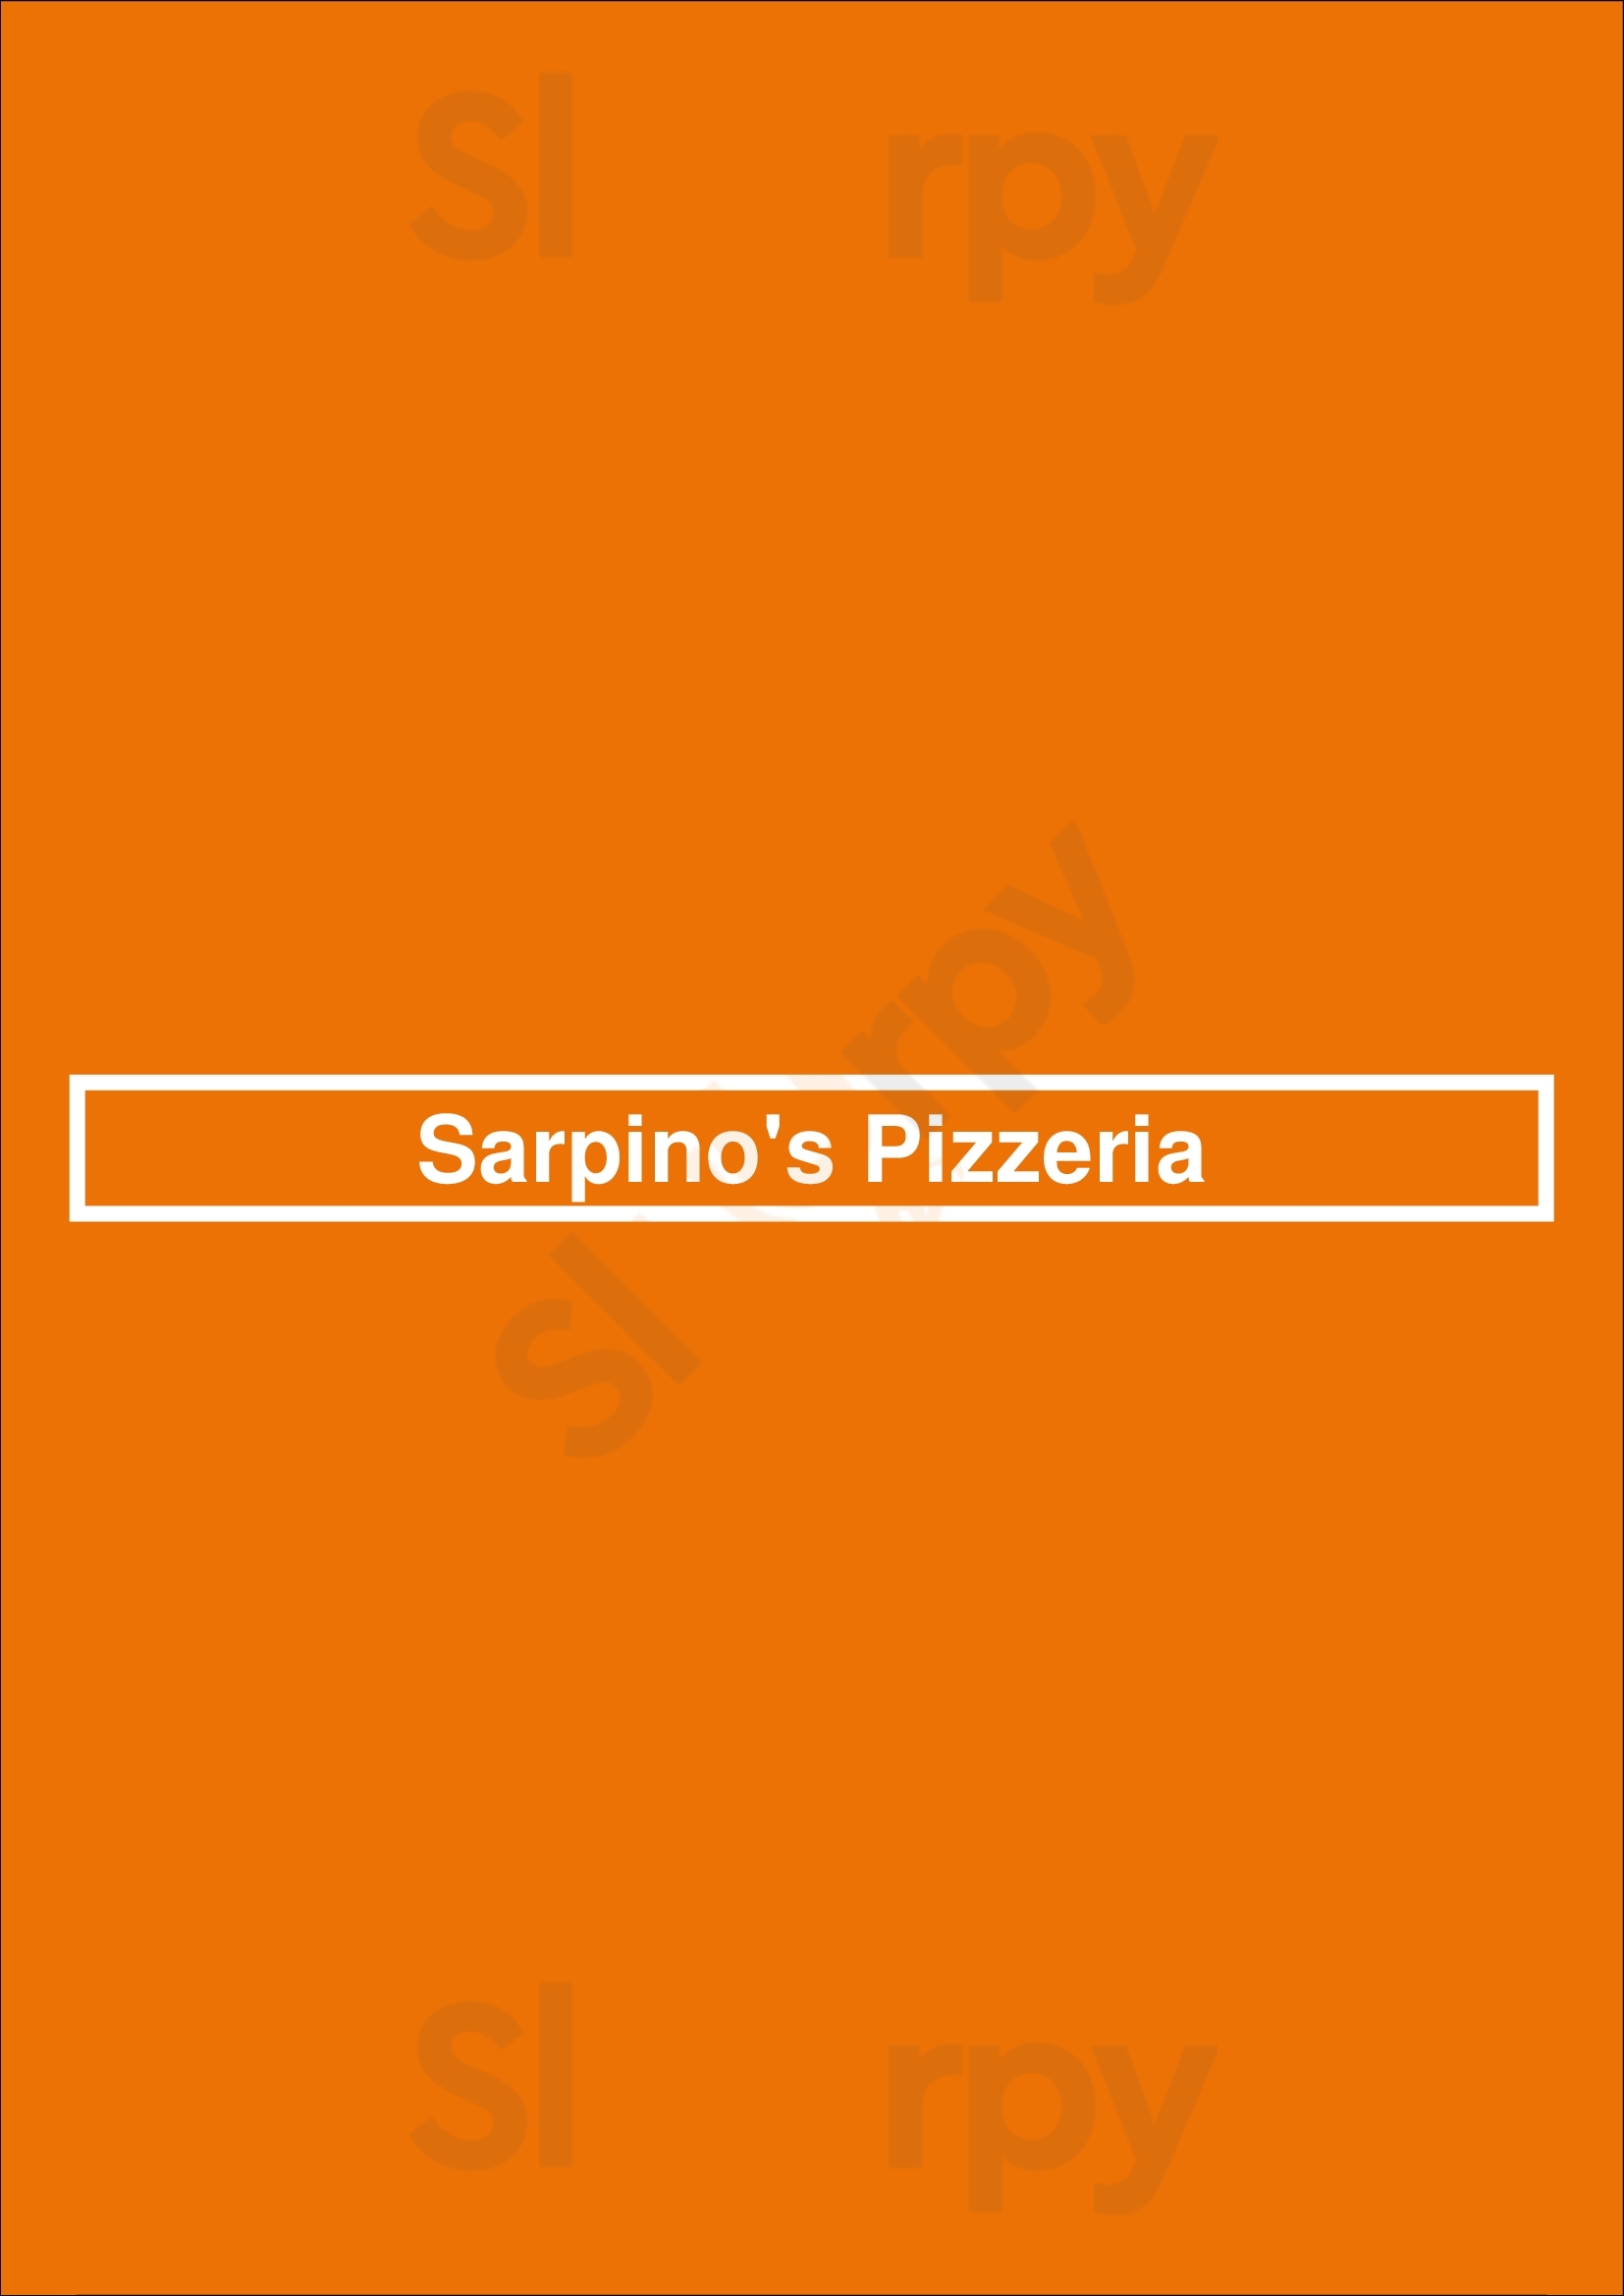 Sarpino's Pizzeria Atlanta Menu - 1